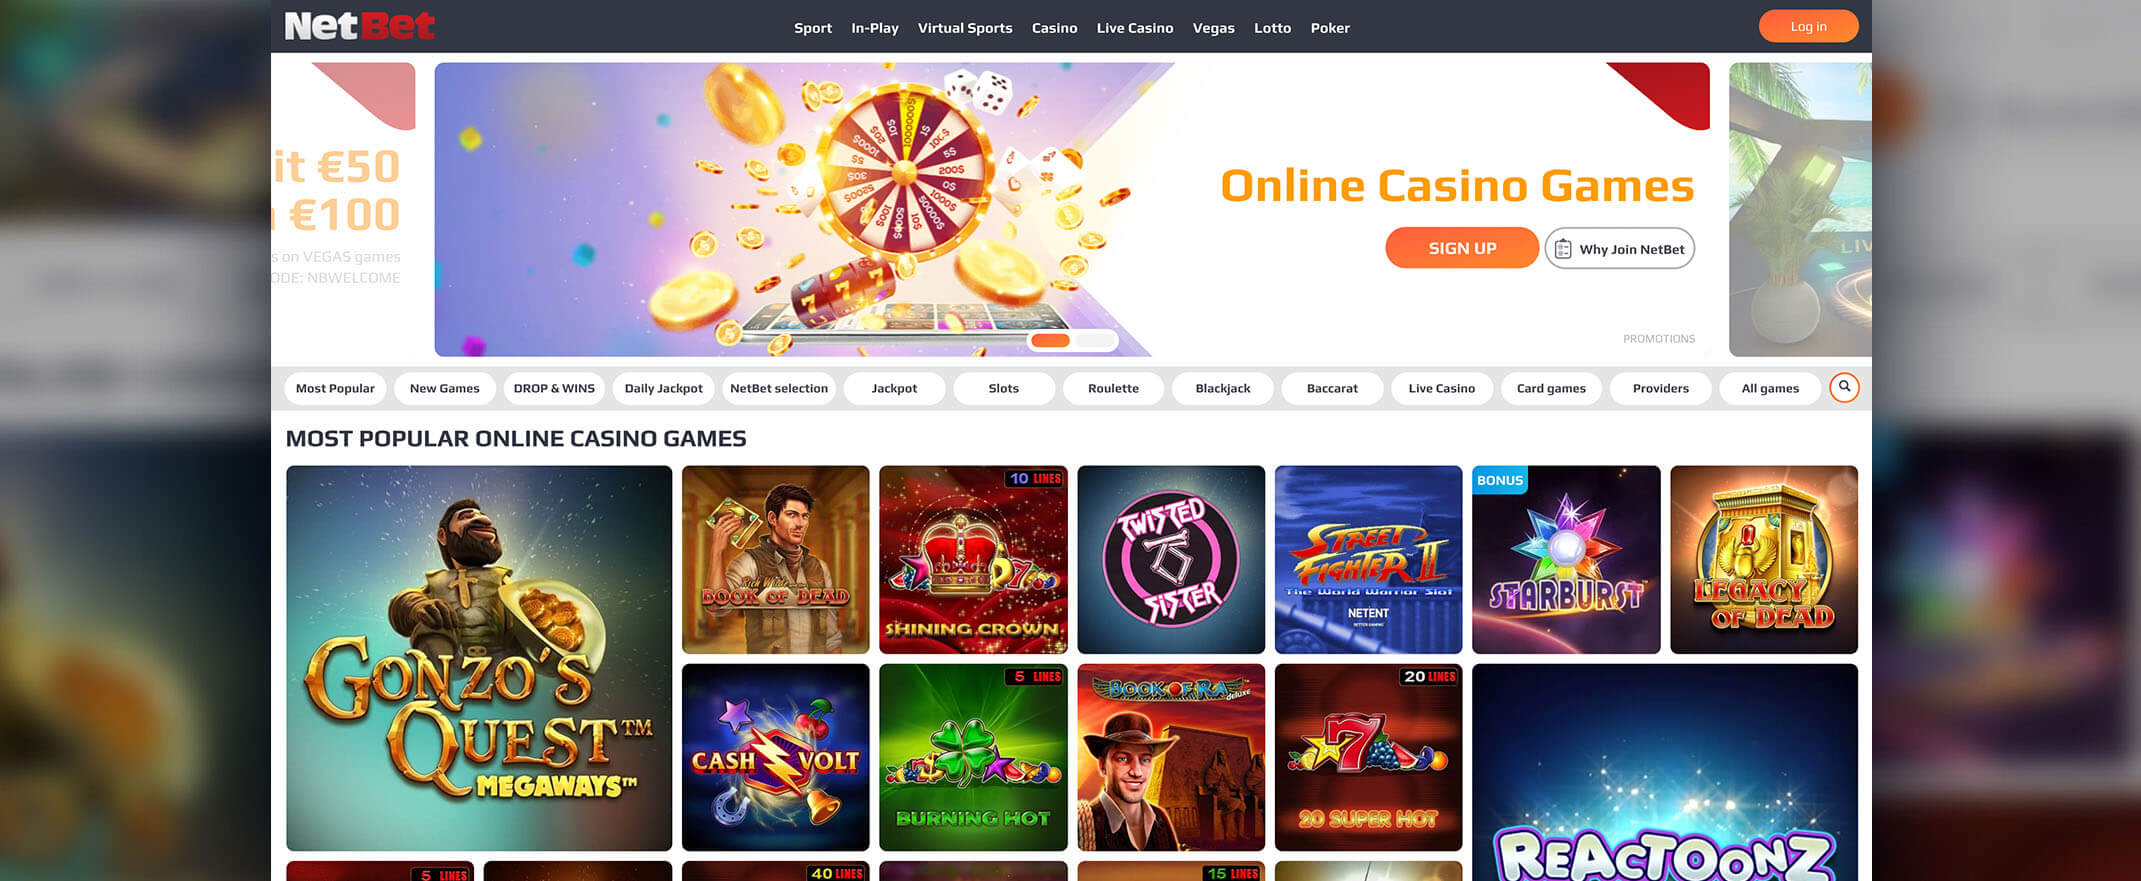 NetBet casino games